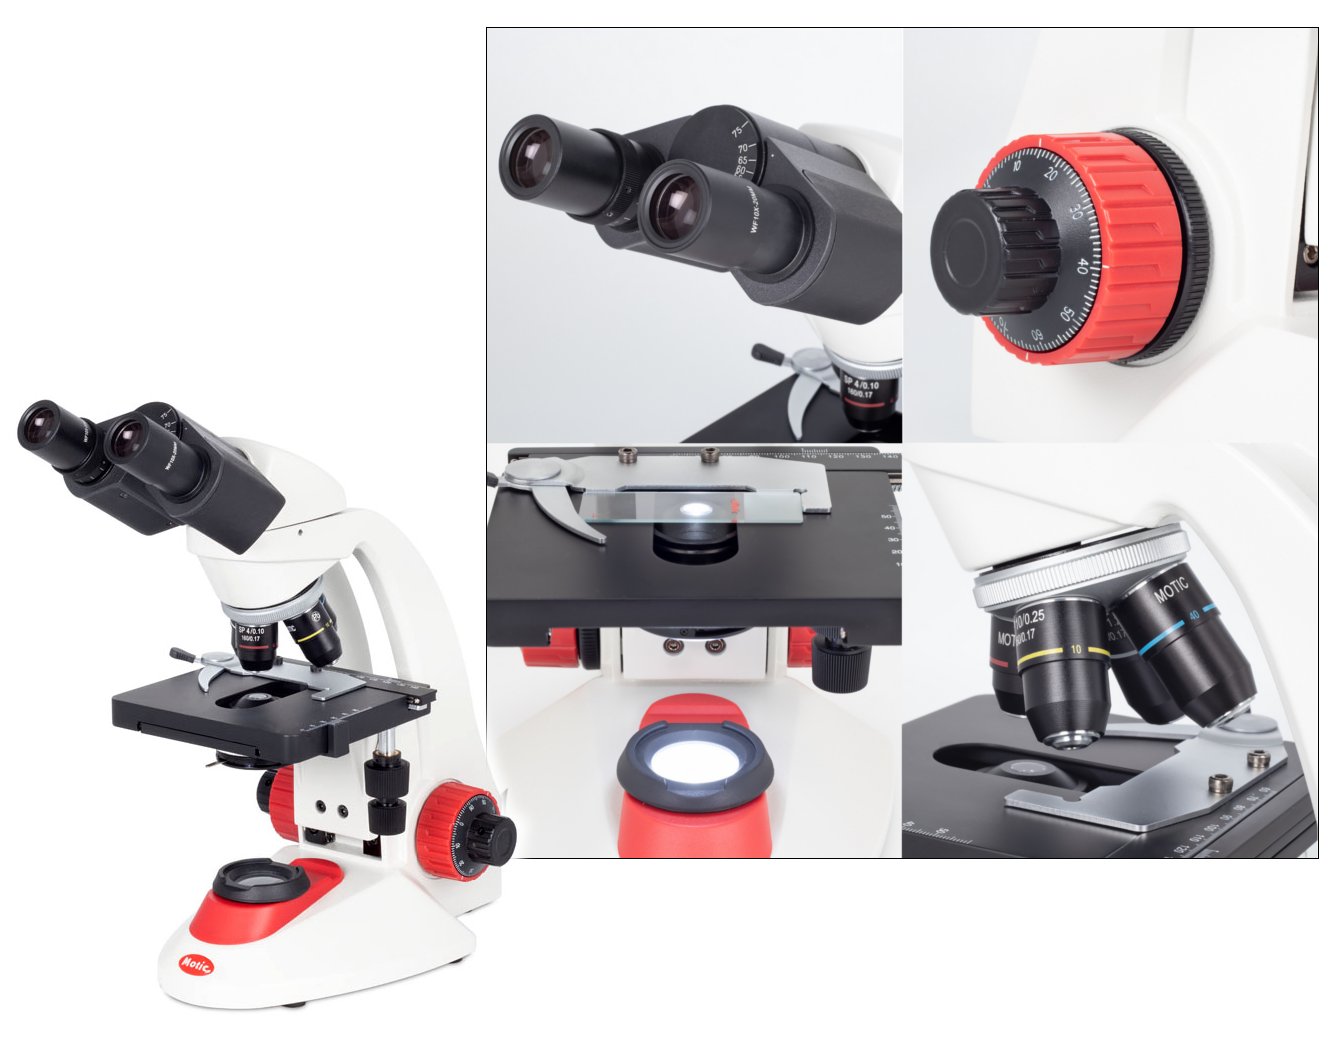 Microscopio Binocular Estudiantil Avanzado c/Optica Acromática de Alto Constraste RED-220